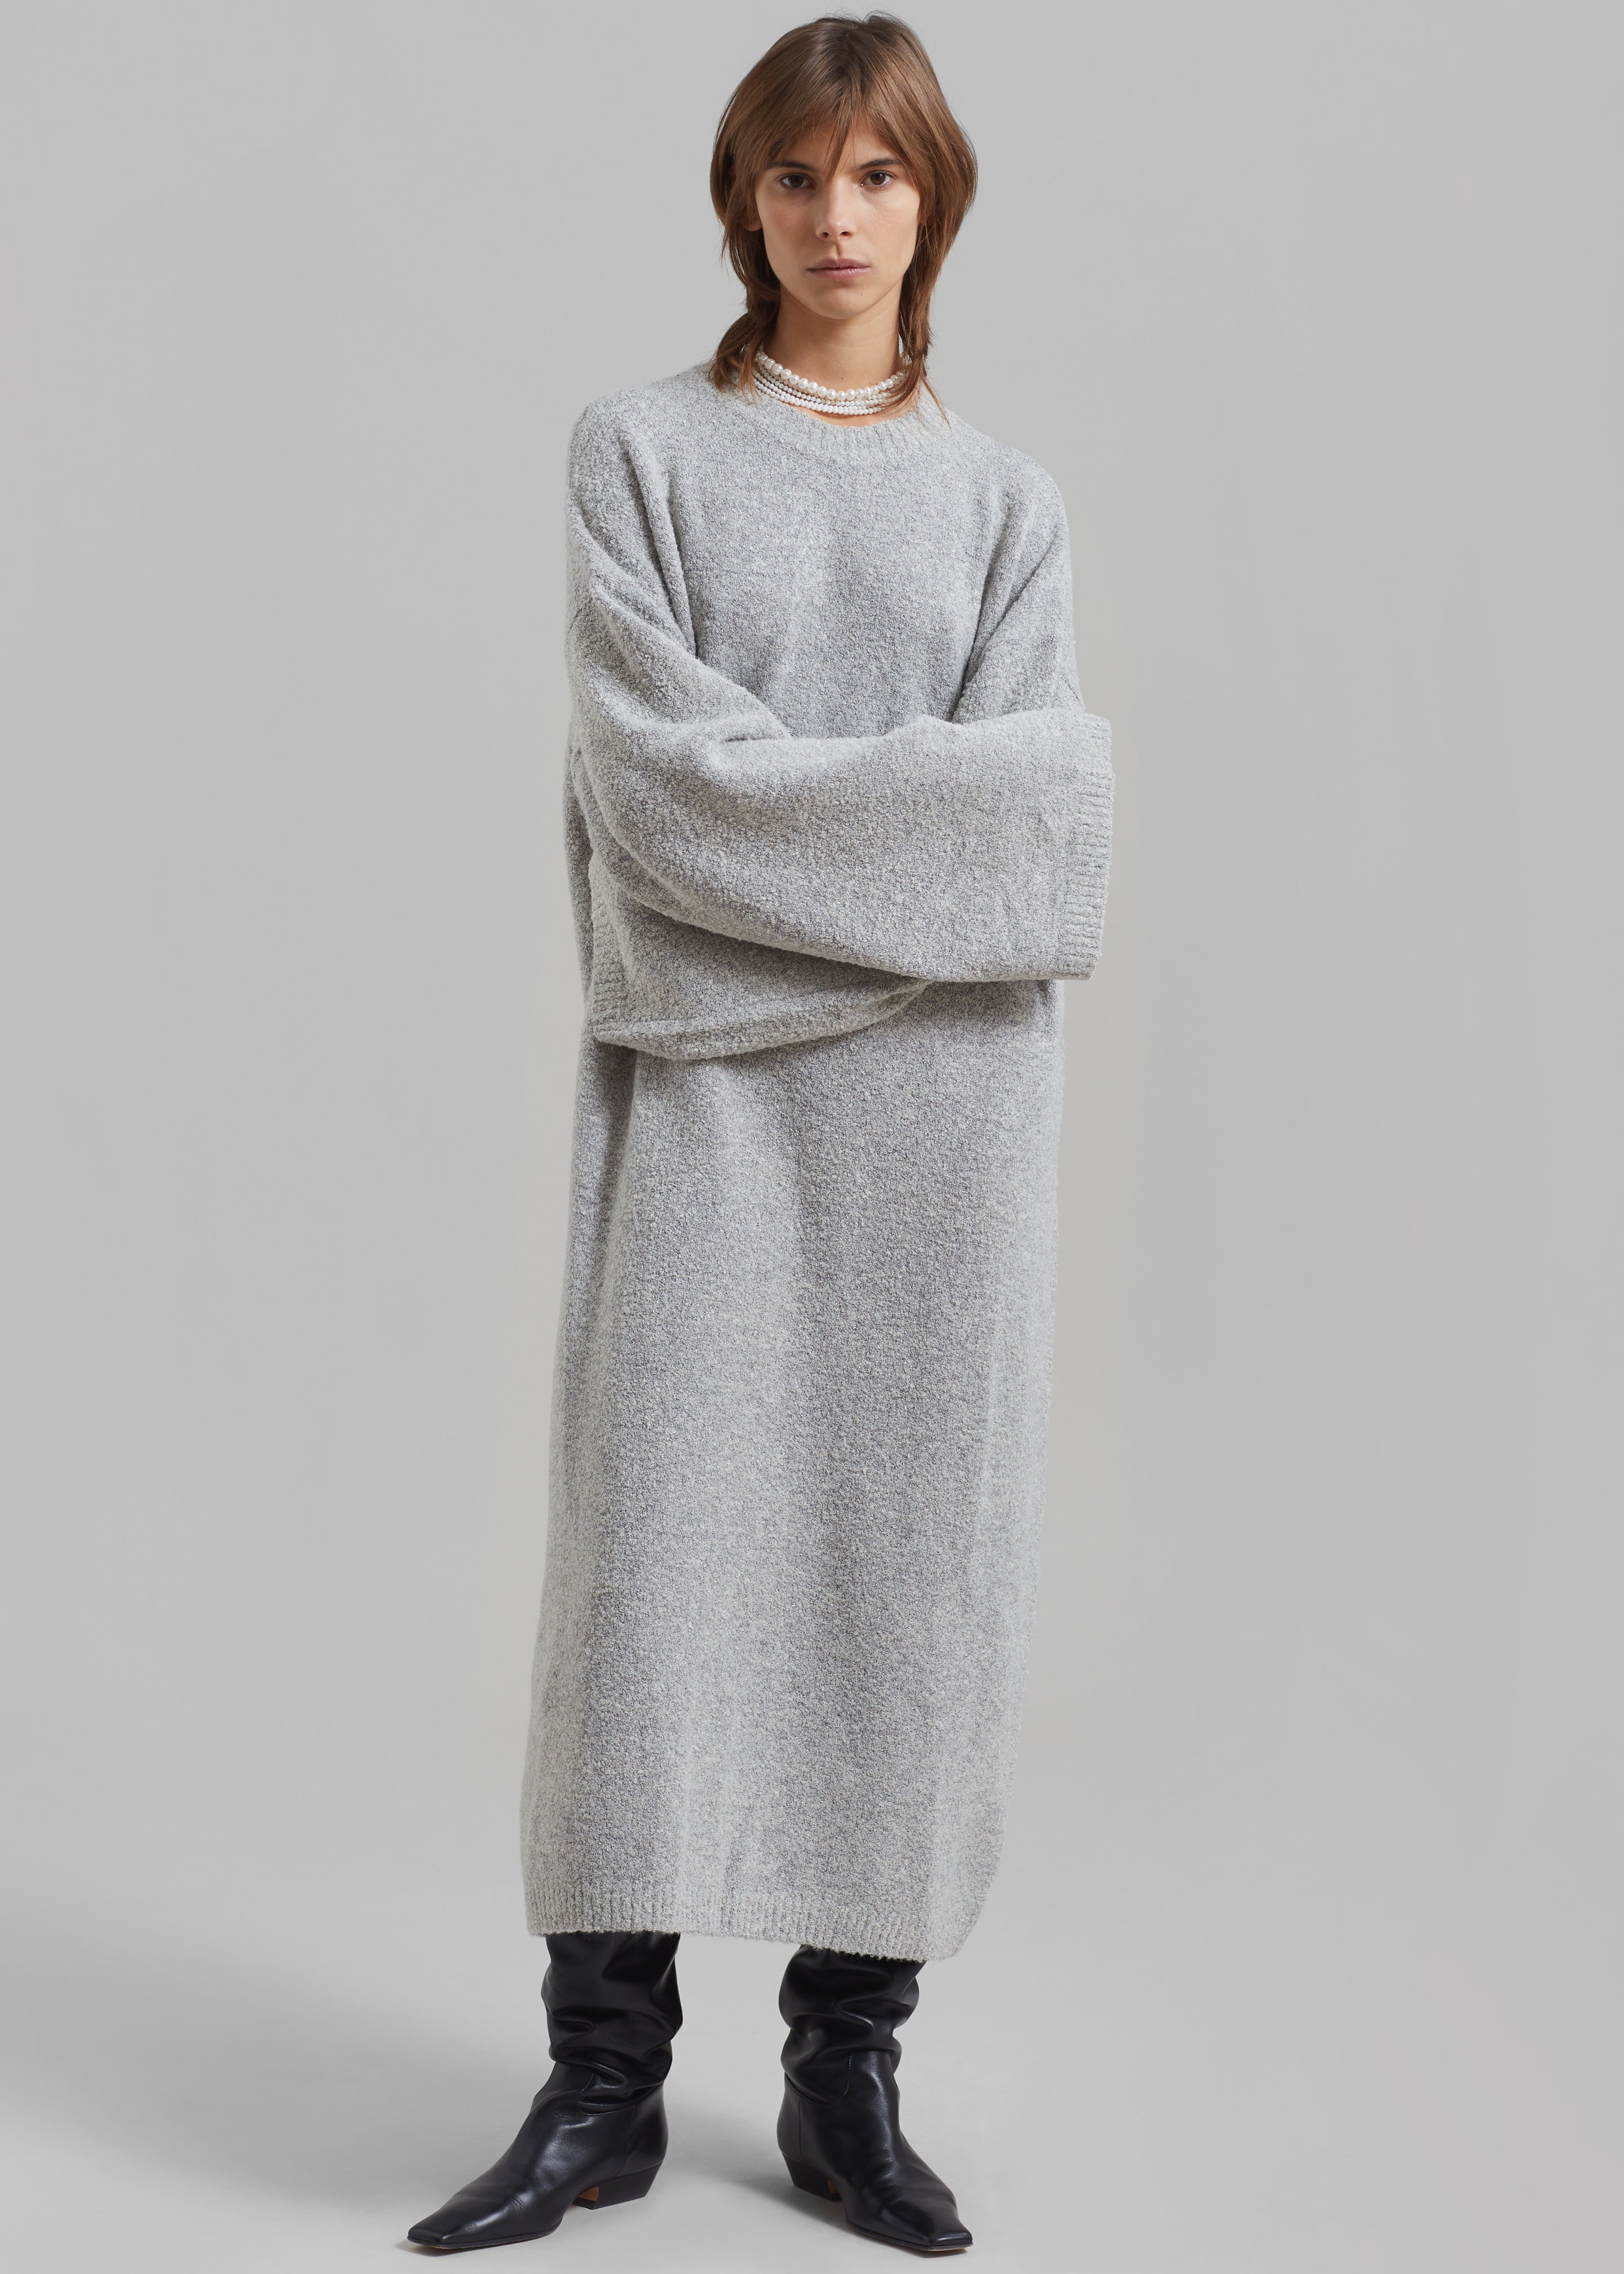 Alba Long Hooded Dress - Grey - 2